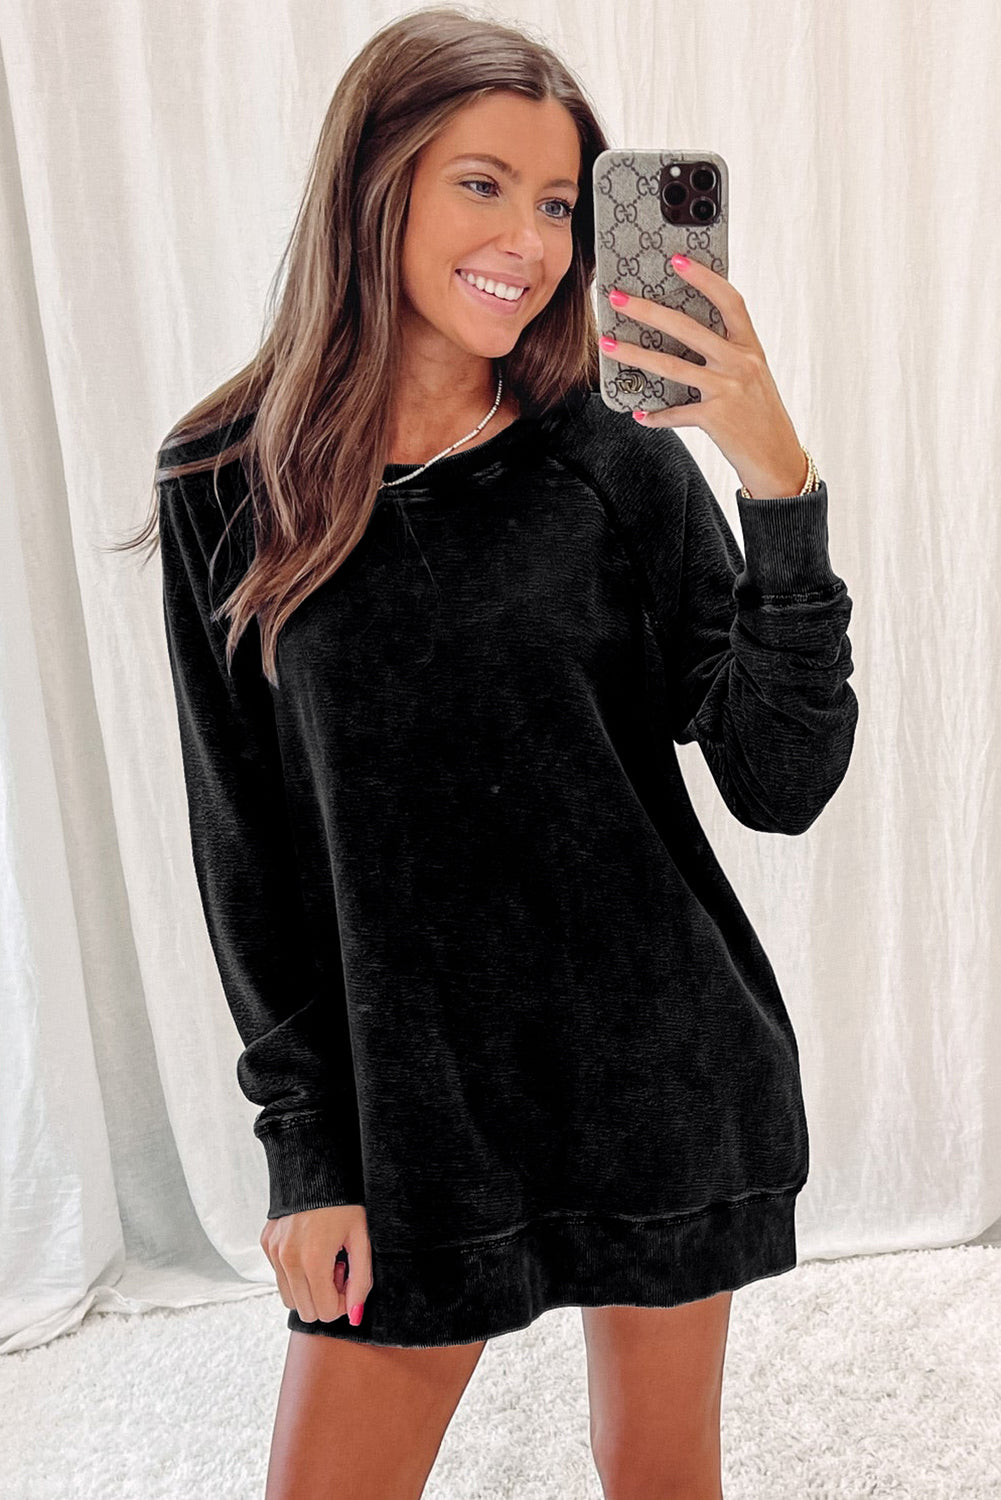 Black Mineral Wash Oversized Pullover Sweatshirt